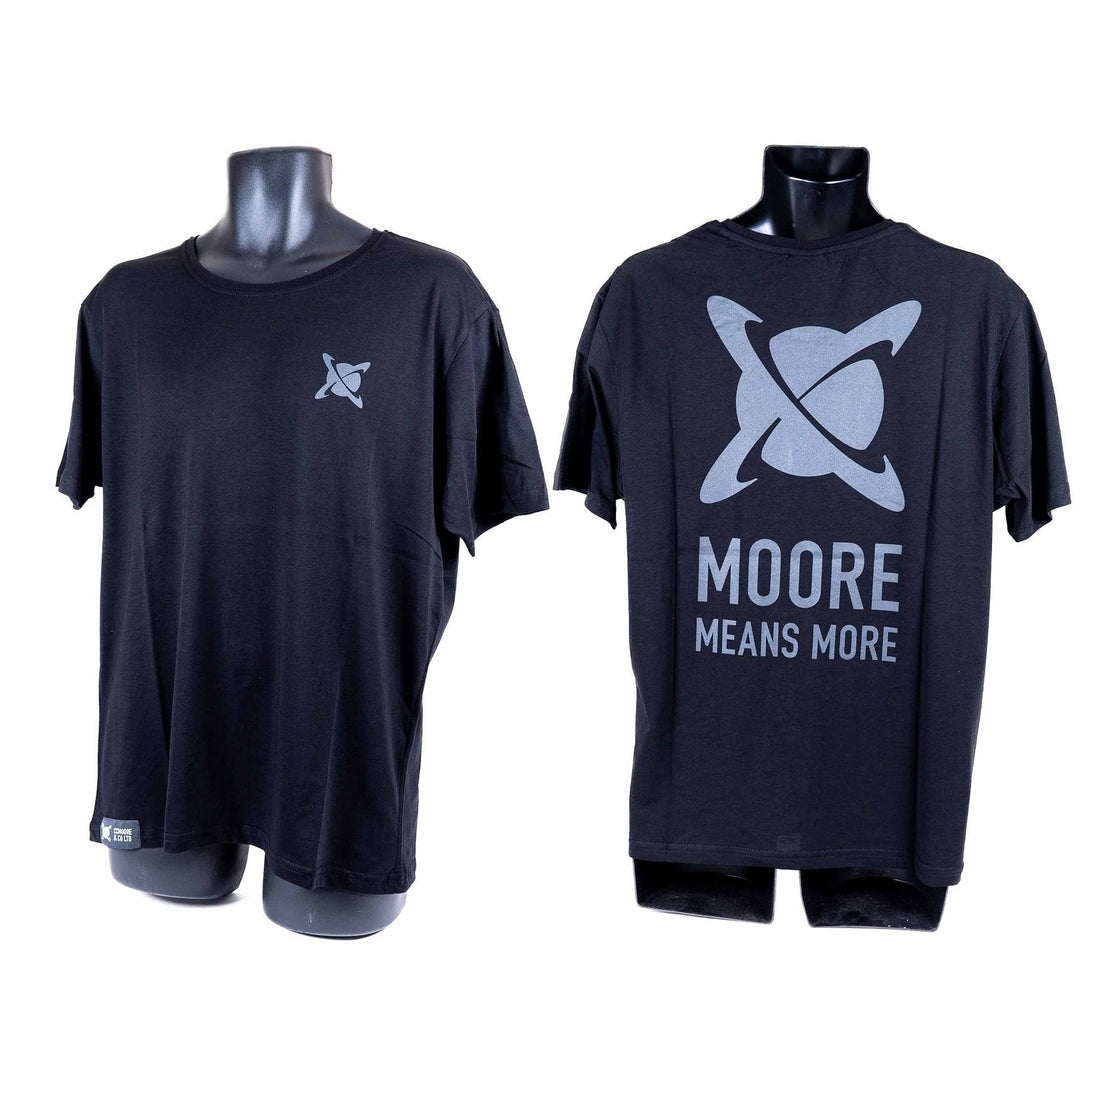 CC Moore Black T-Shirt Small